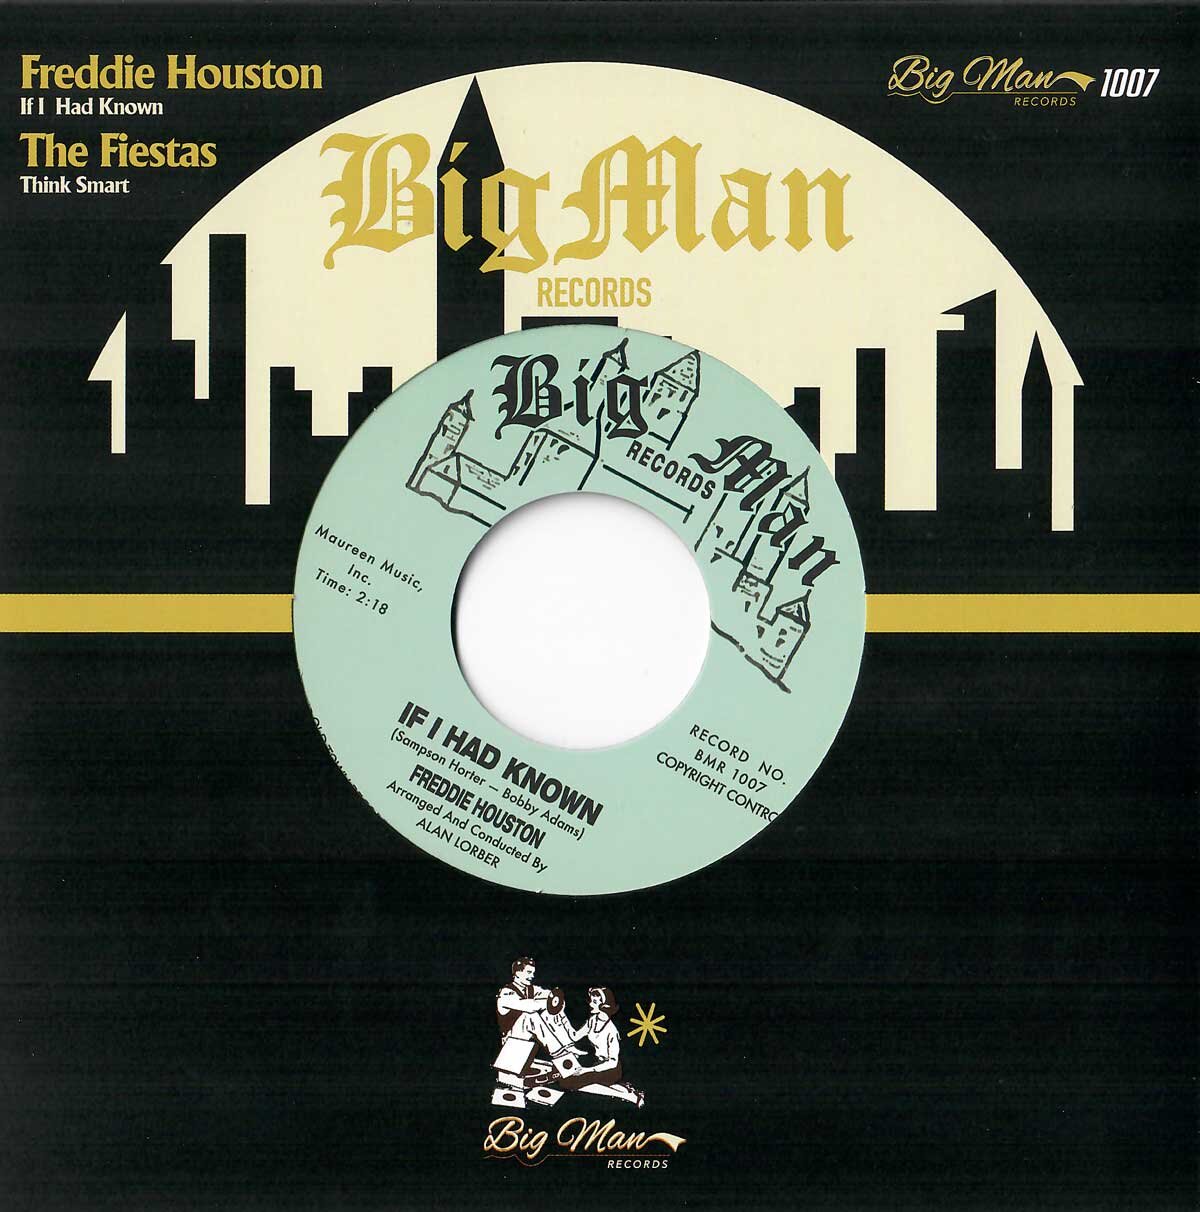 Freddie Houston / Fiestas - If I had known / Think Smart - Big Man Records BMR 1007 zoom image